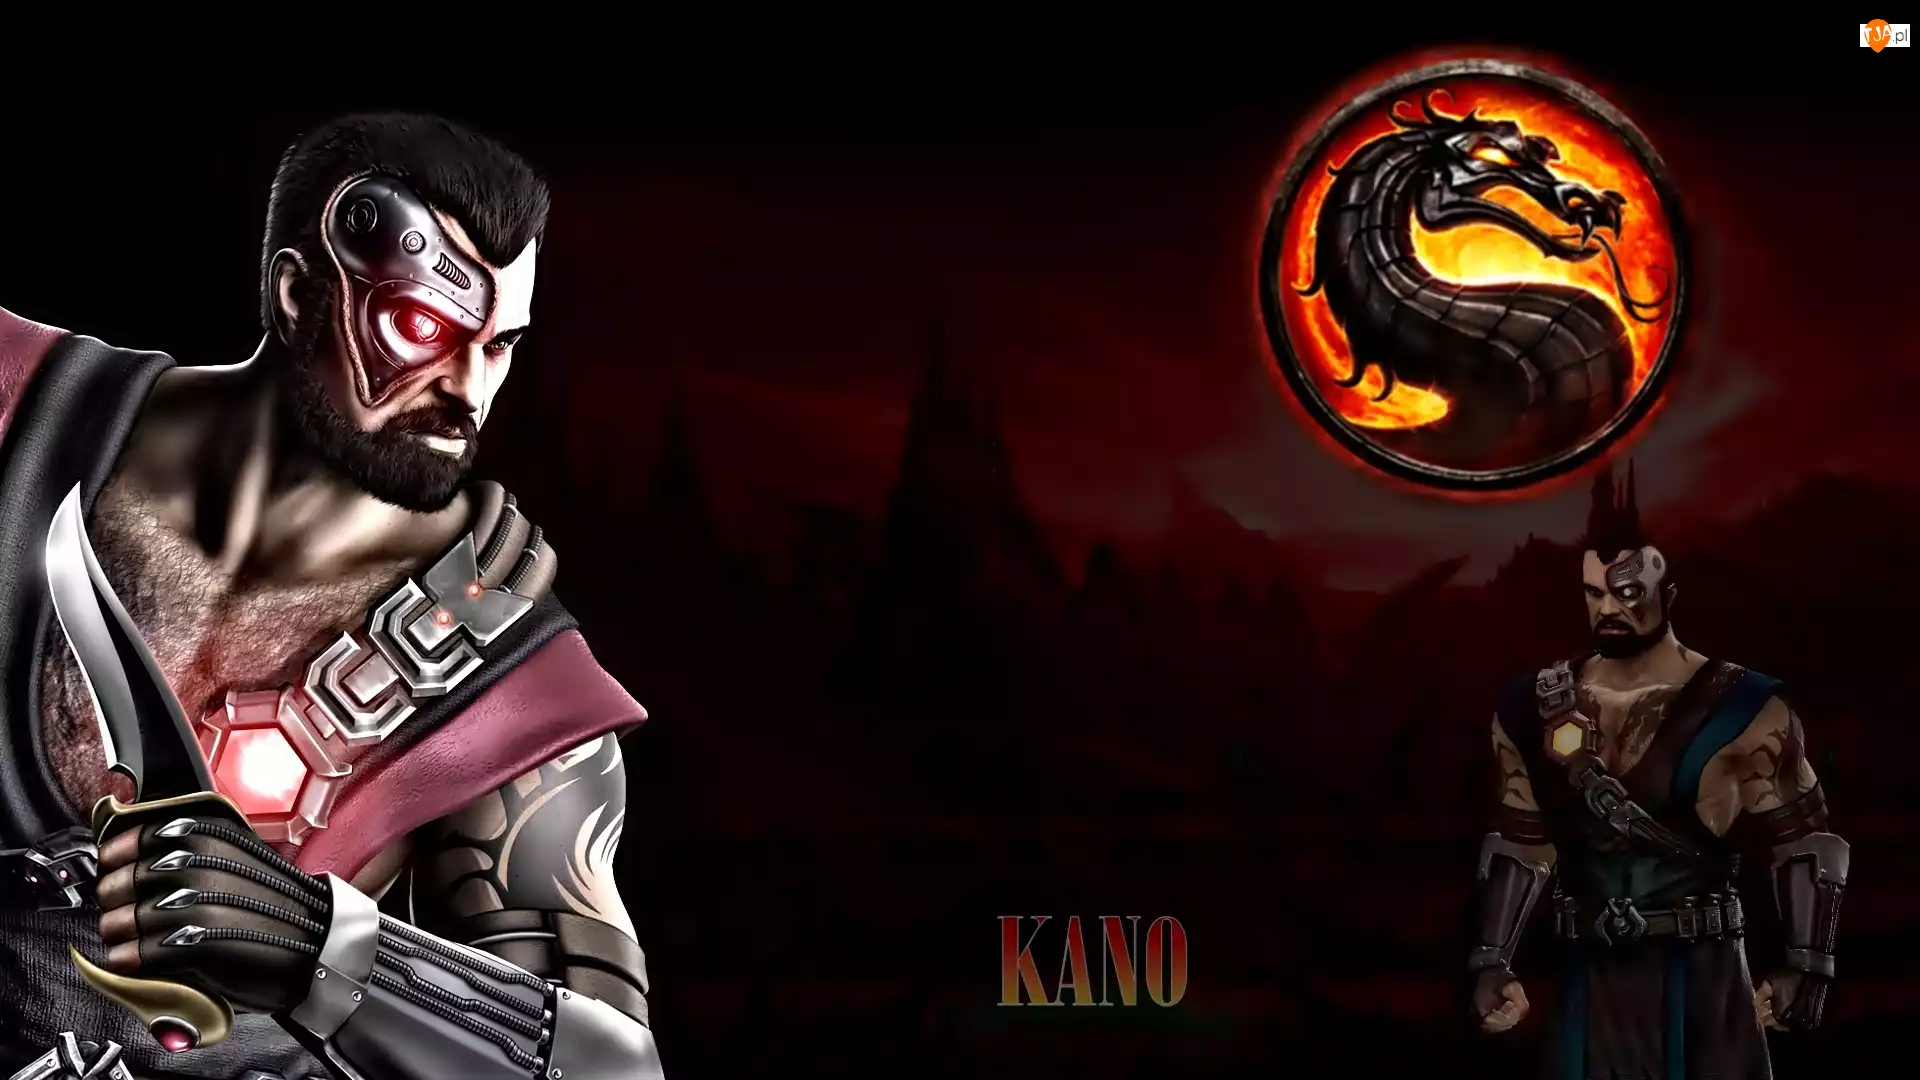 Kano, Mortal Kombat